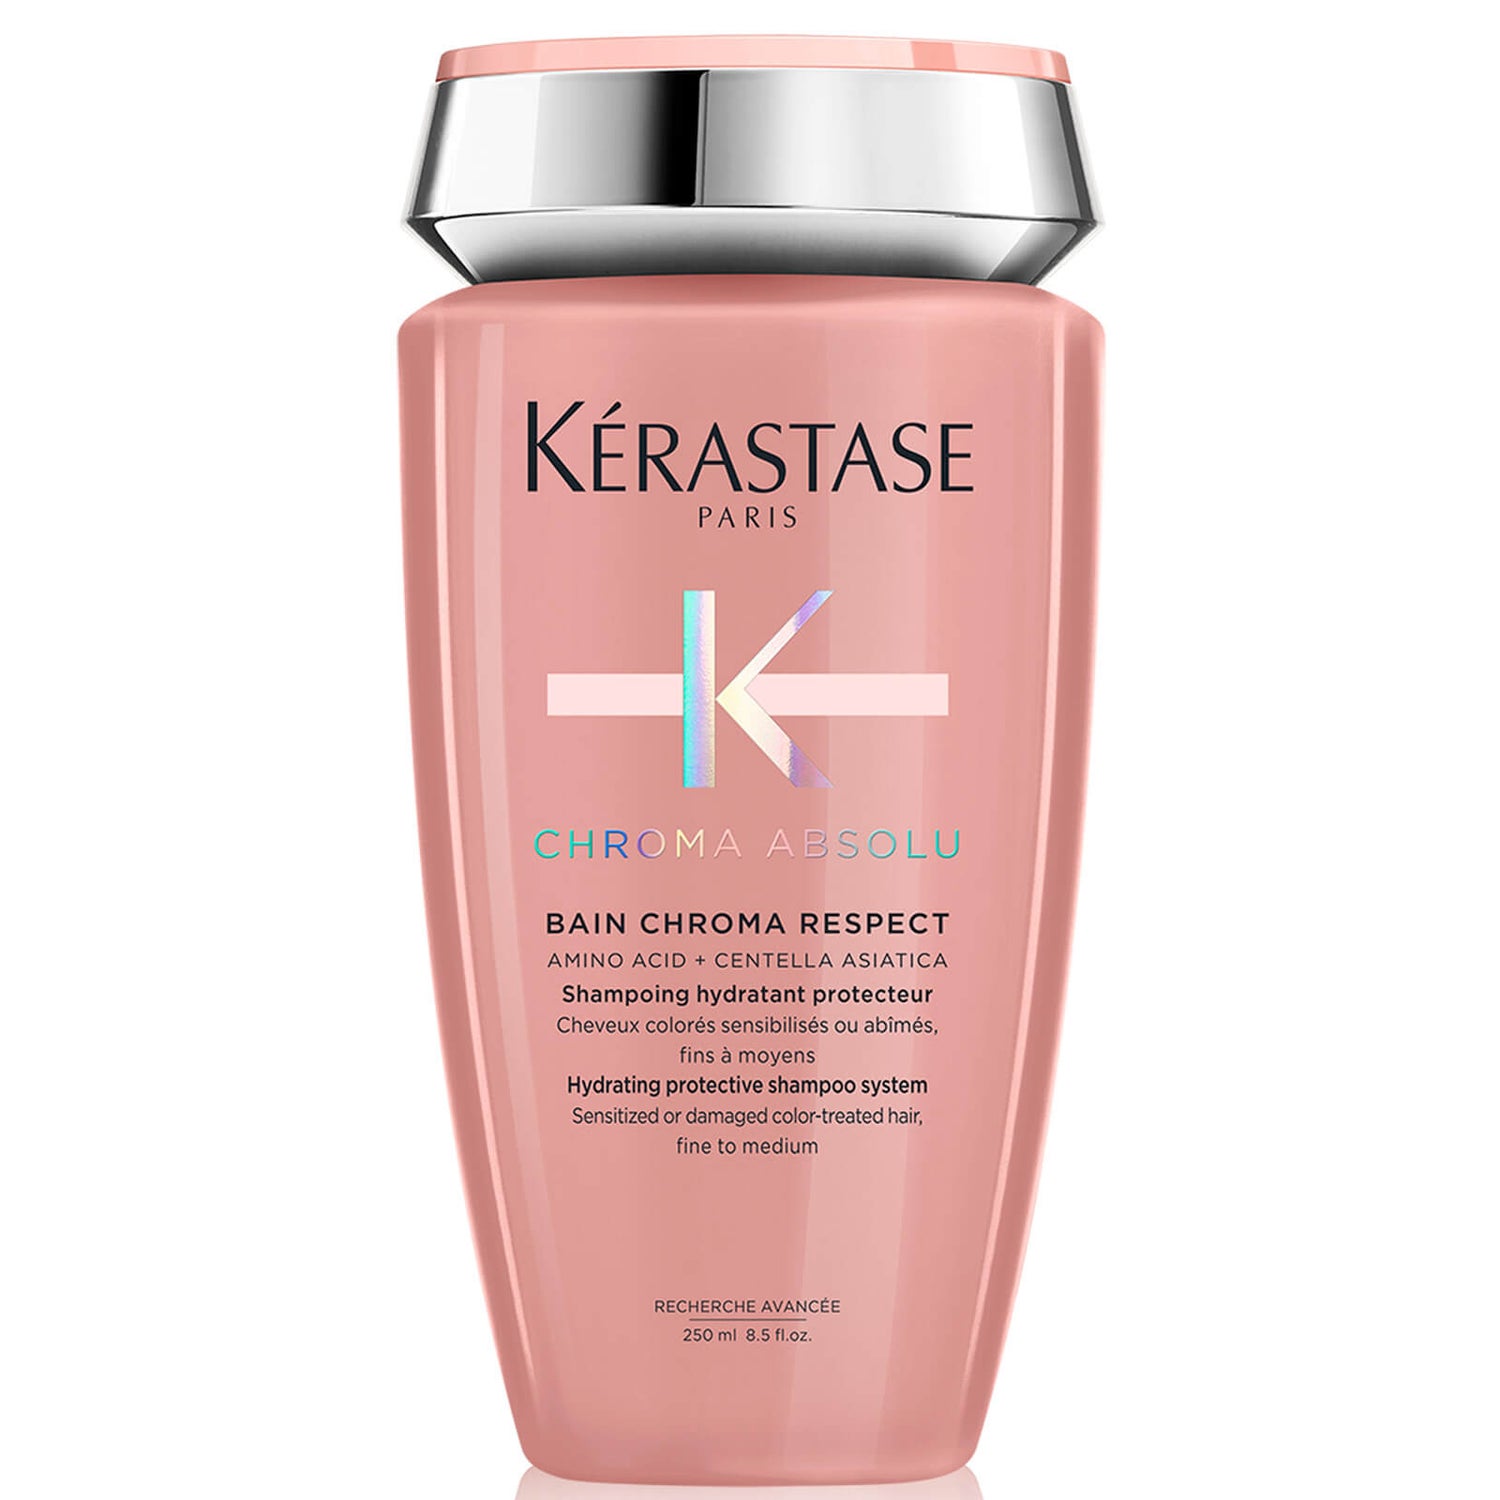 Kérastase Chroma Absolu Hydrating Protective Shampoo 250ml